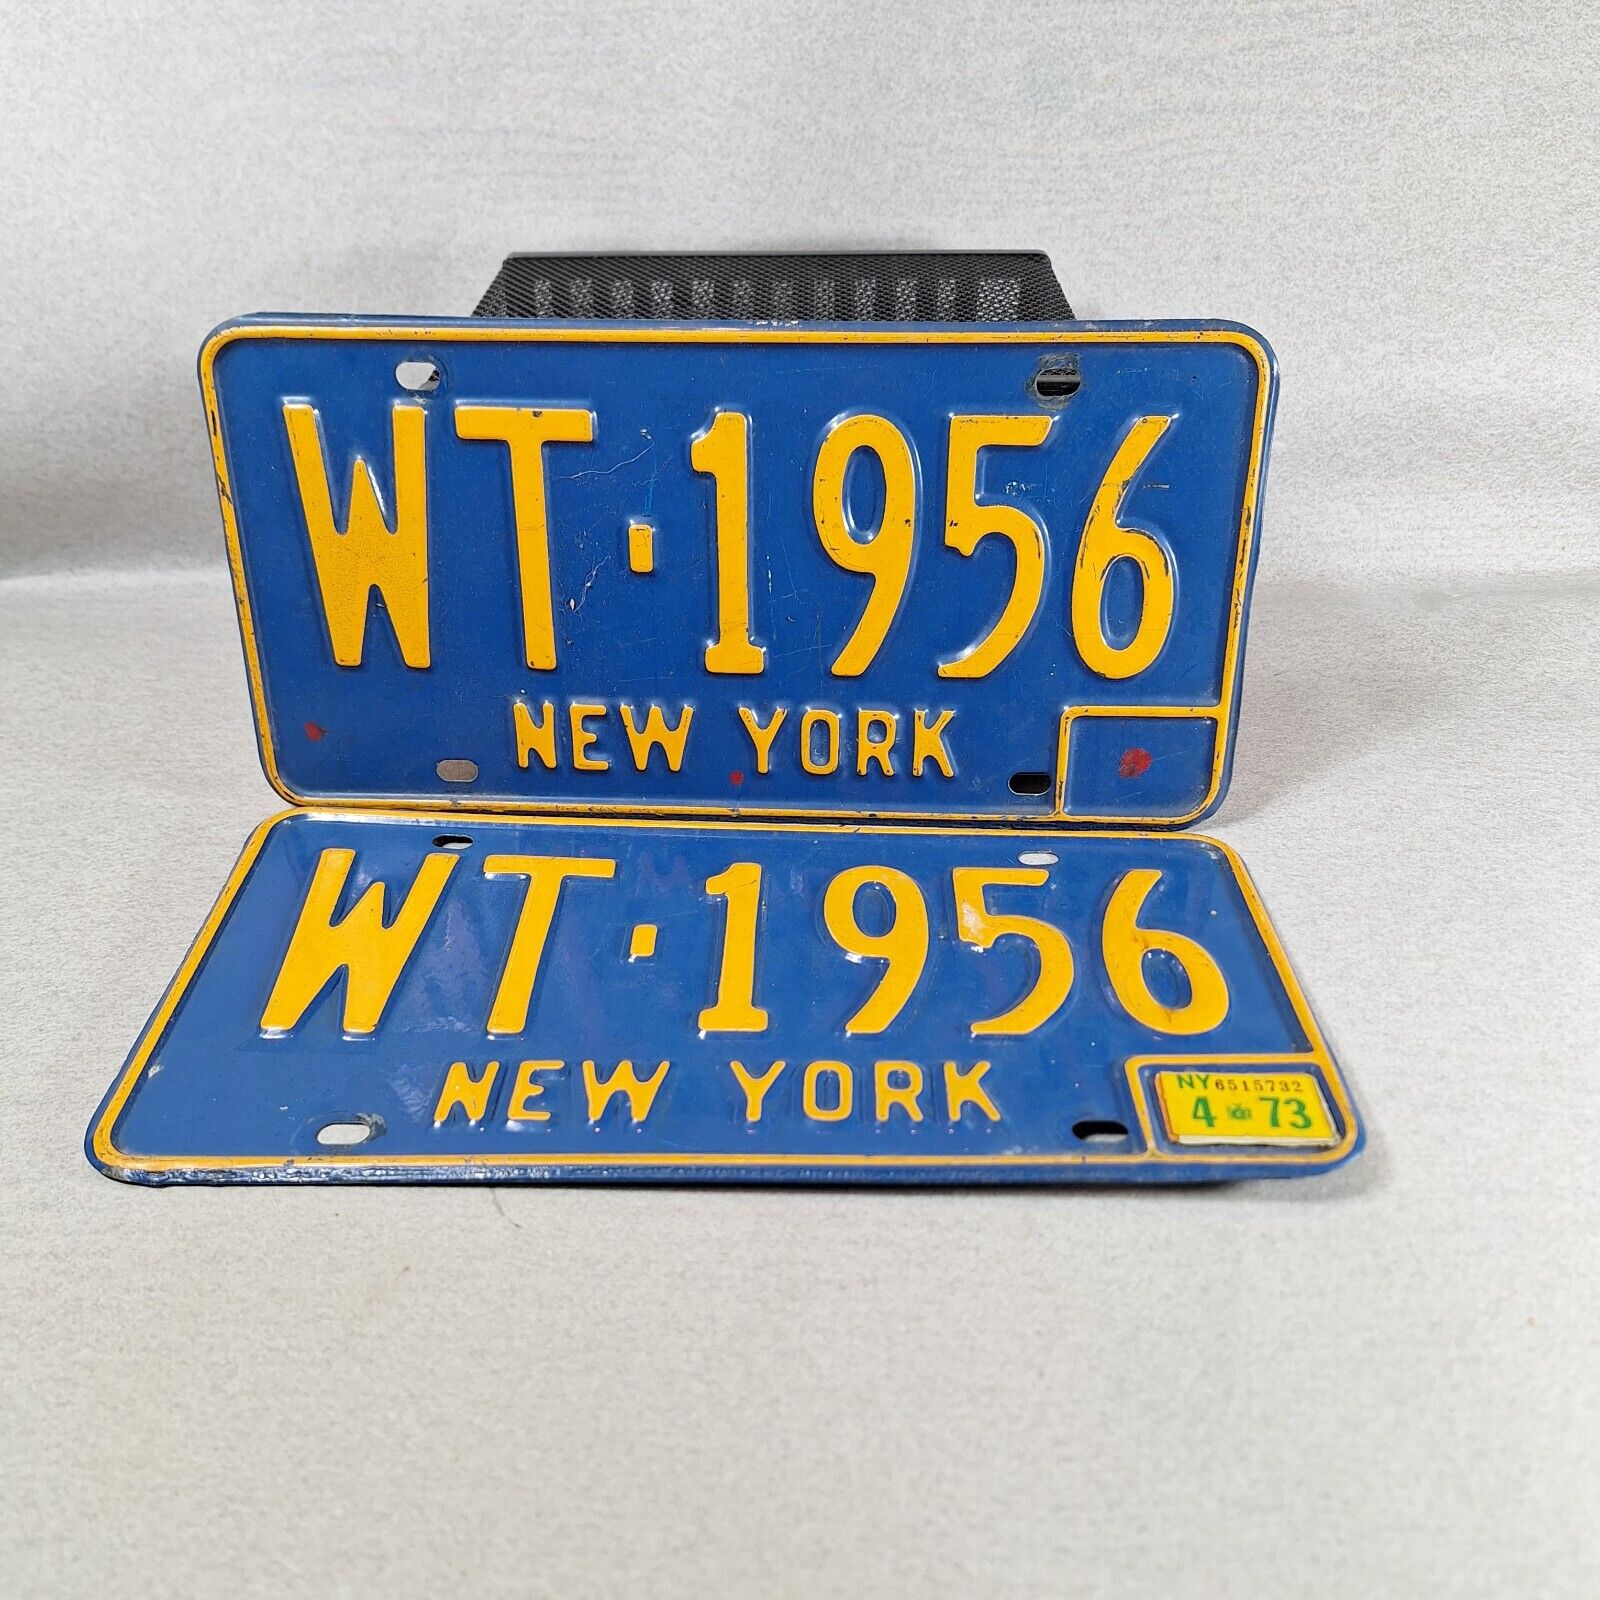 1973 New York License Plate Pair Blue 1966-73 Series #WT 1956